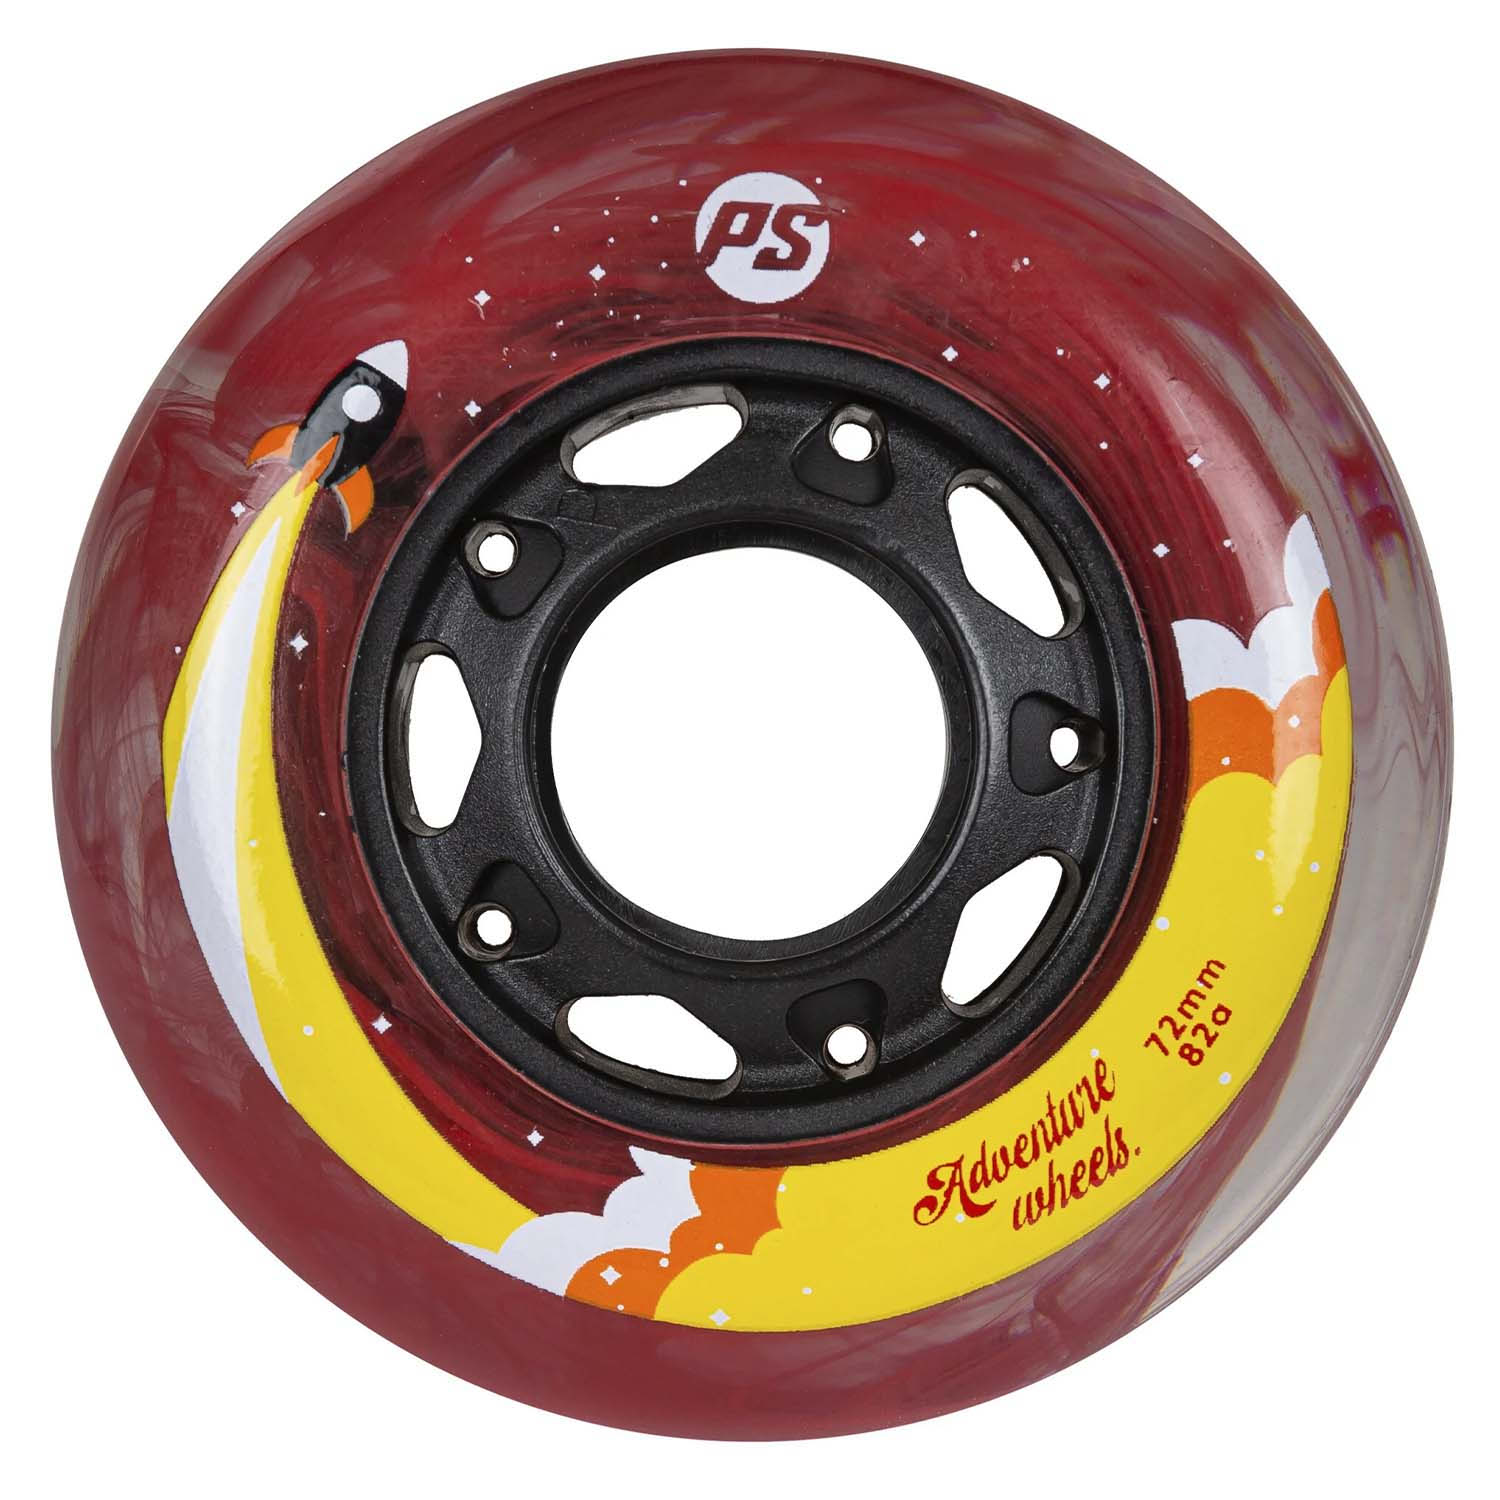 Комплект колёс для роликов Powerslide Adventure 72/82A, 4-pack Black/Red